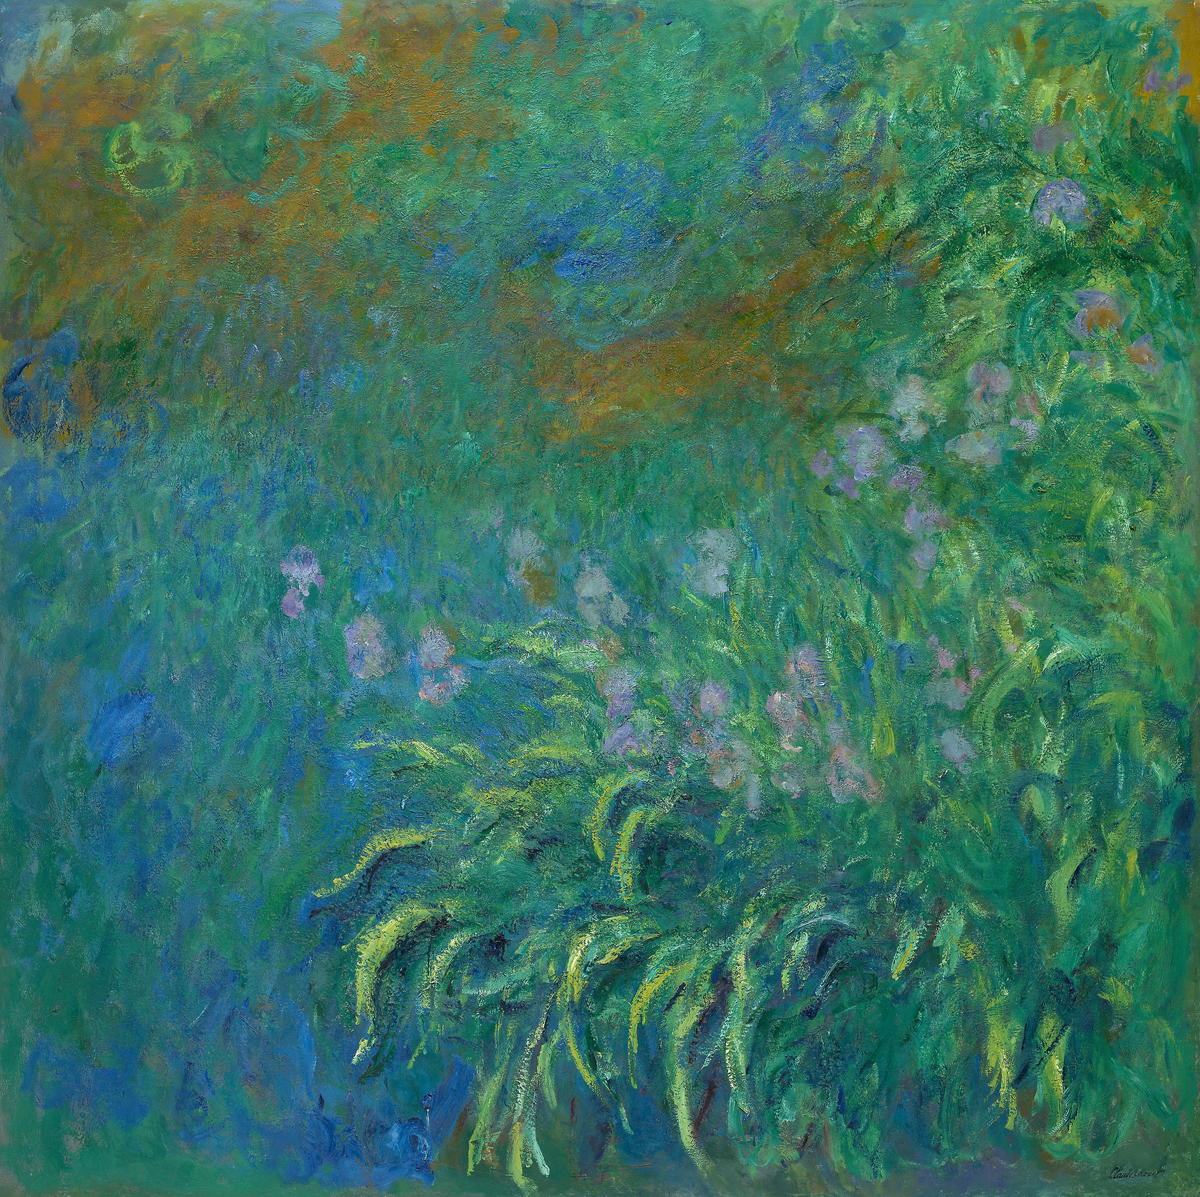 The original master work this is based on. Irises by Claude Monet - 1914/17 - CC0 Public Domain Designation